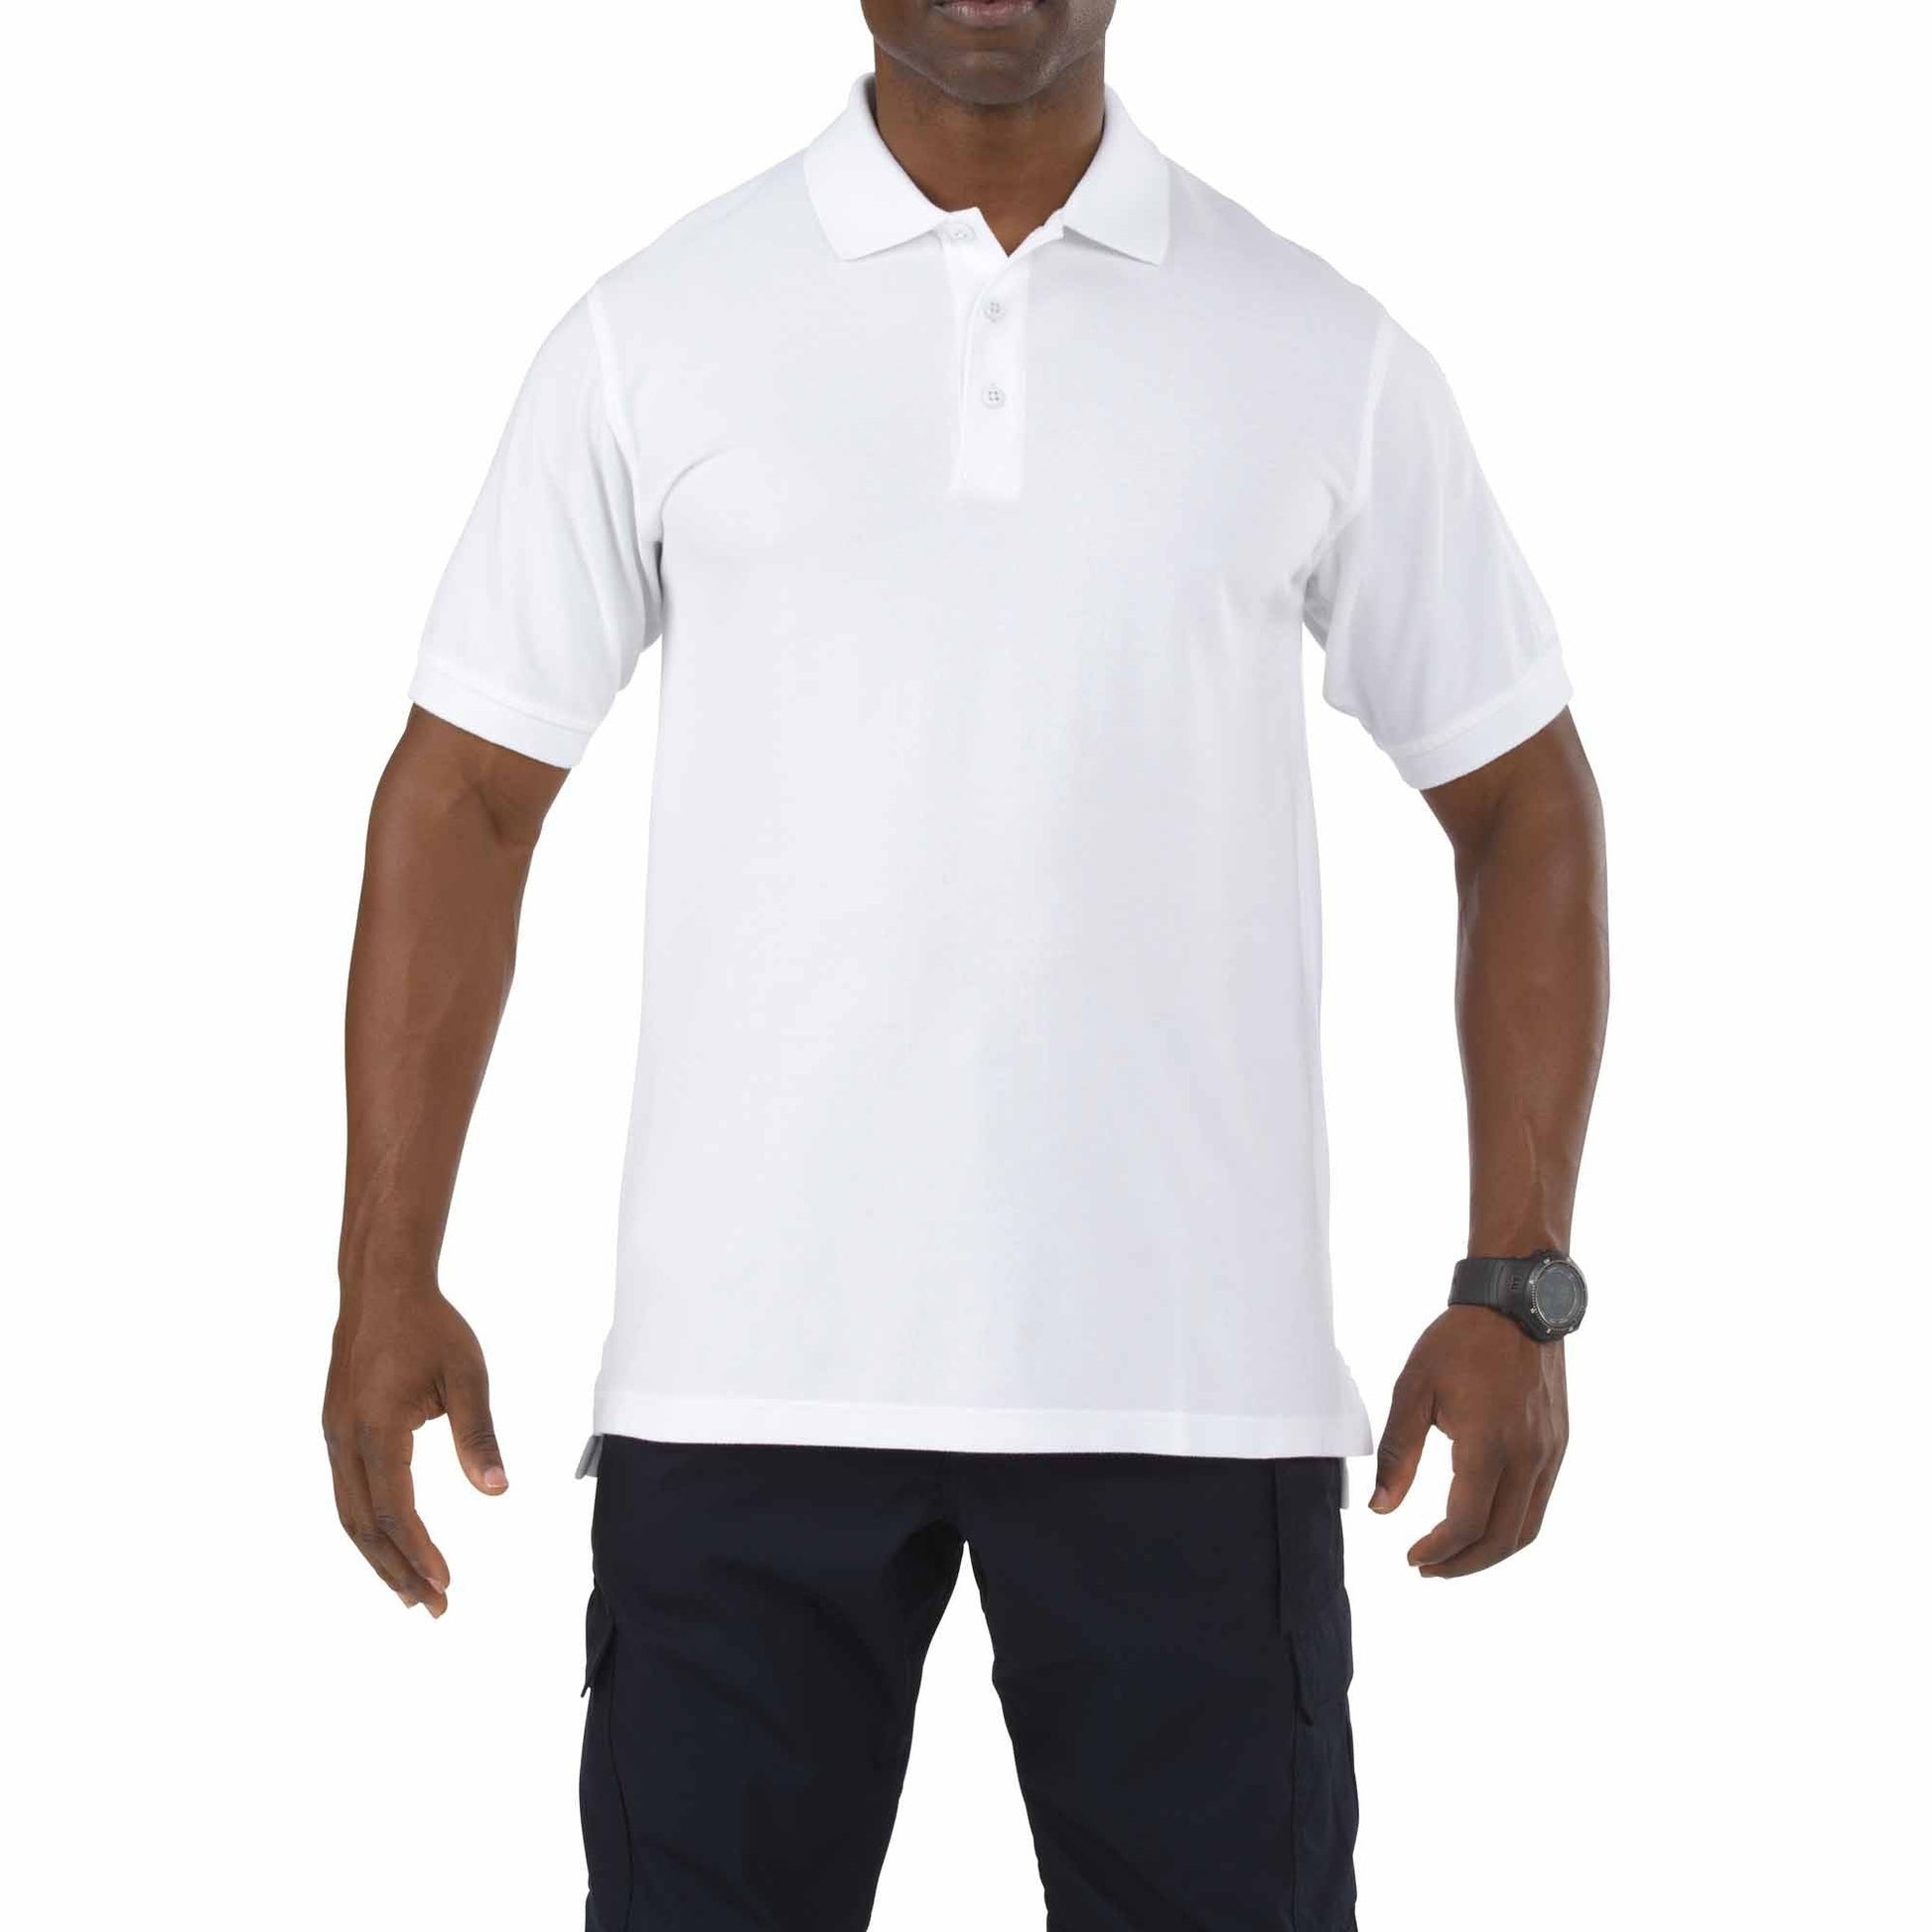 5.11 Tactical Professional Short Sleeve Polo Shirt White Tactical Distributors Ltd New Zealand